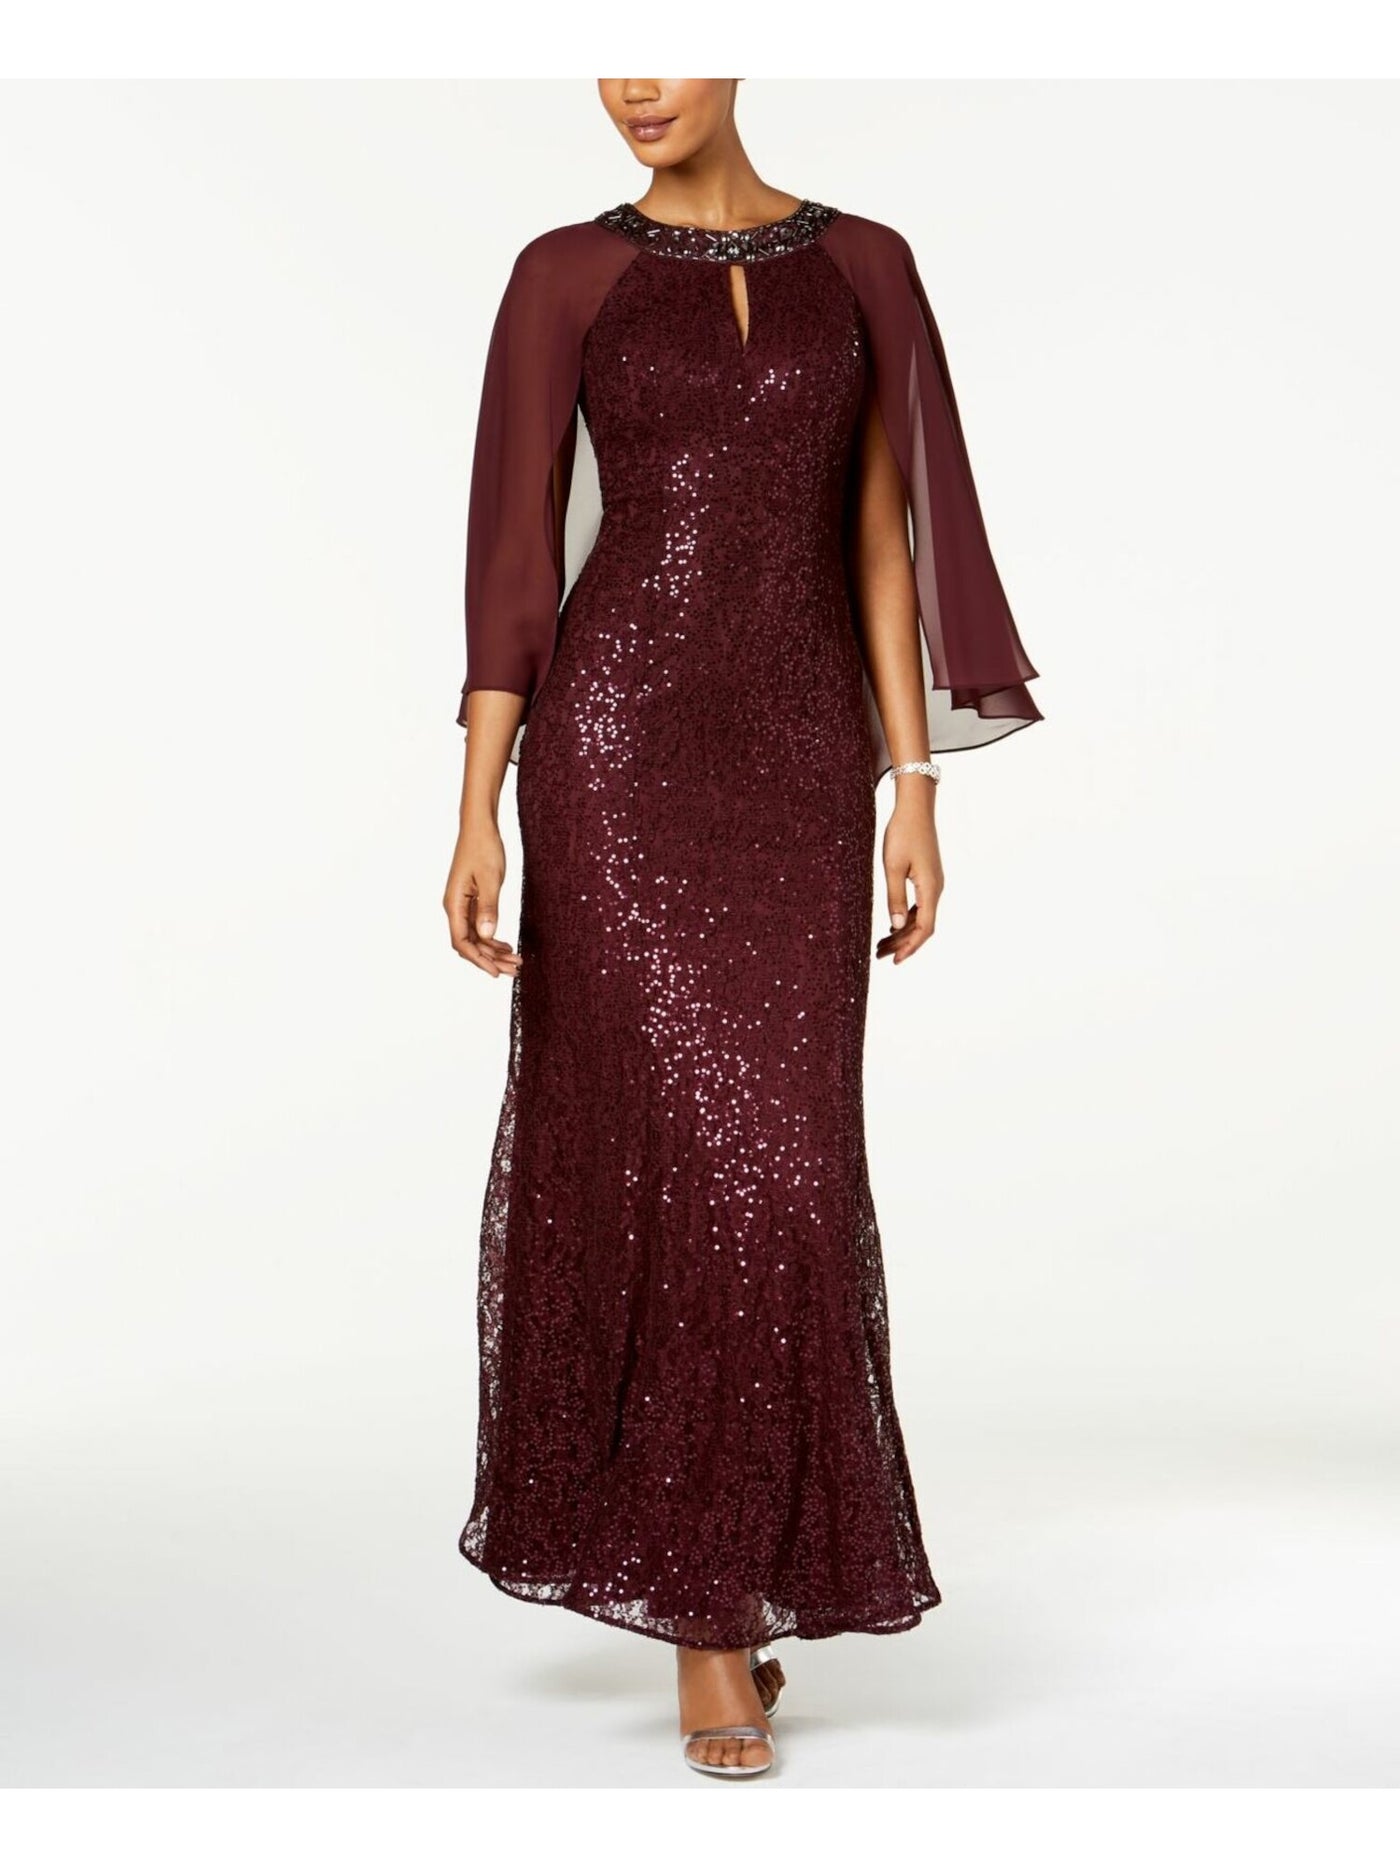 SLNY Womens Burgundy Sequined Rhinestone With Capelet Jewel Neck Maxi Formal Sheath Dress 14